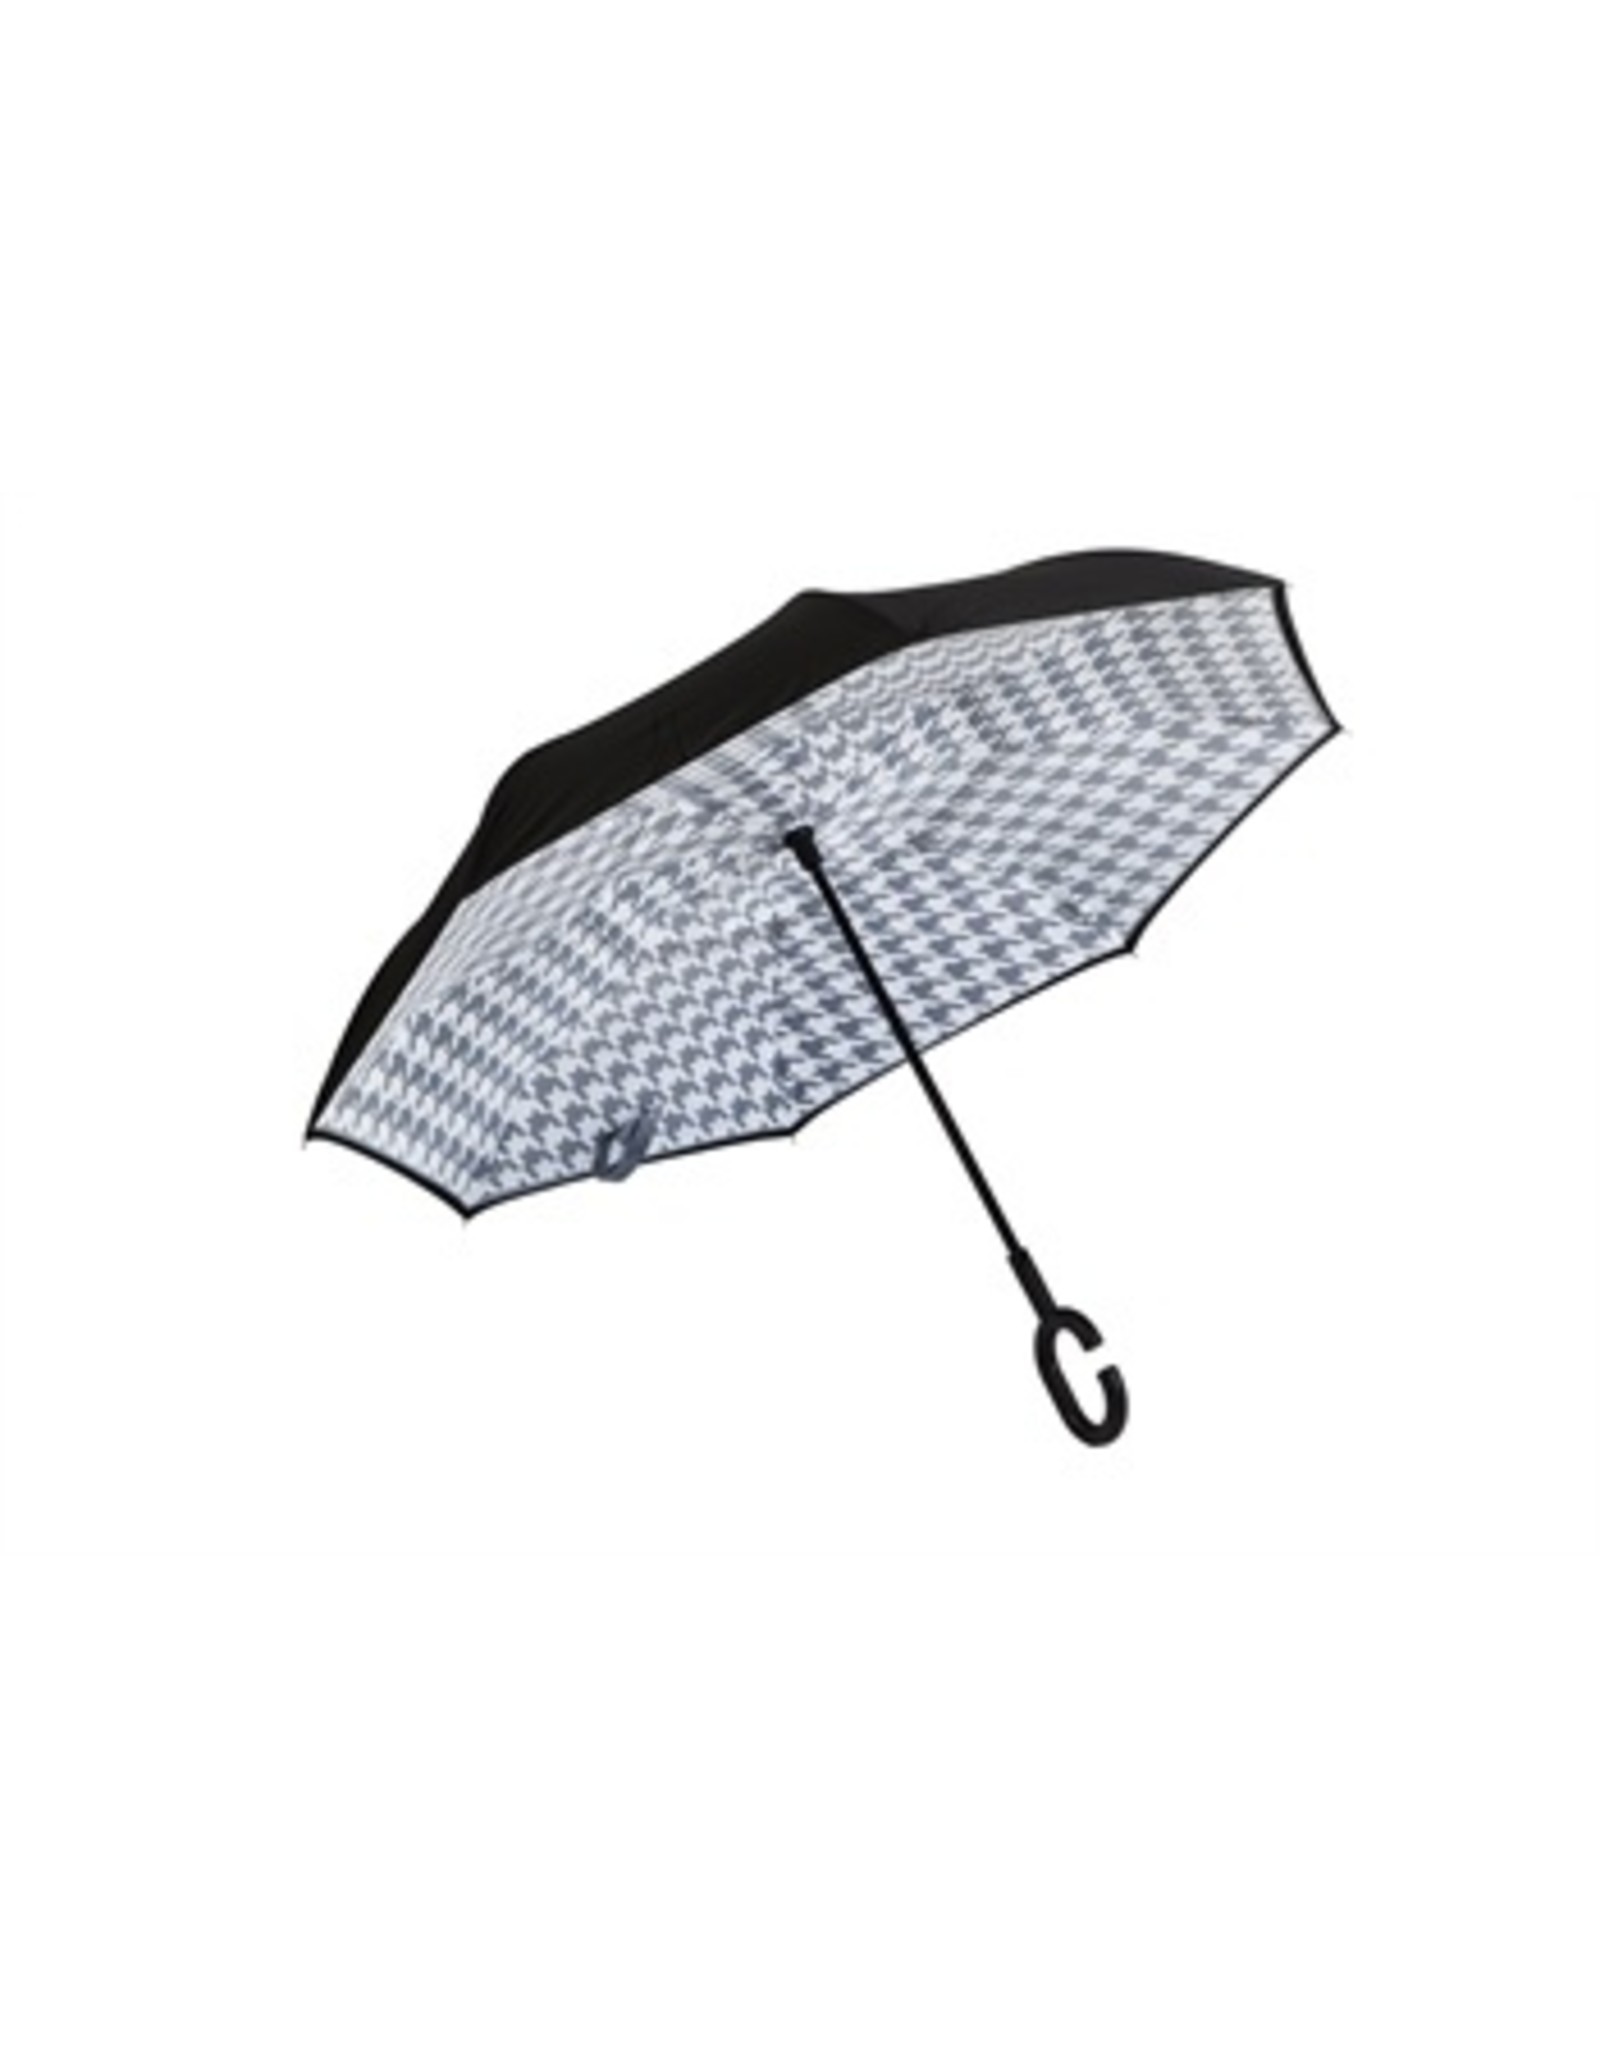 Evergreen Enterprises Houndstooth Inverted umbrella, Black/Gray